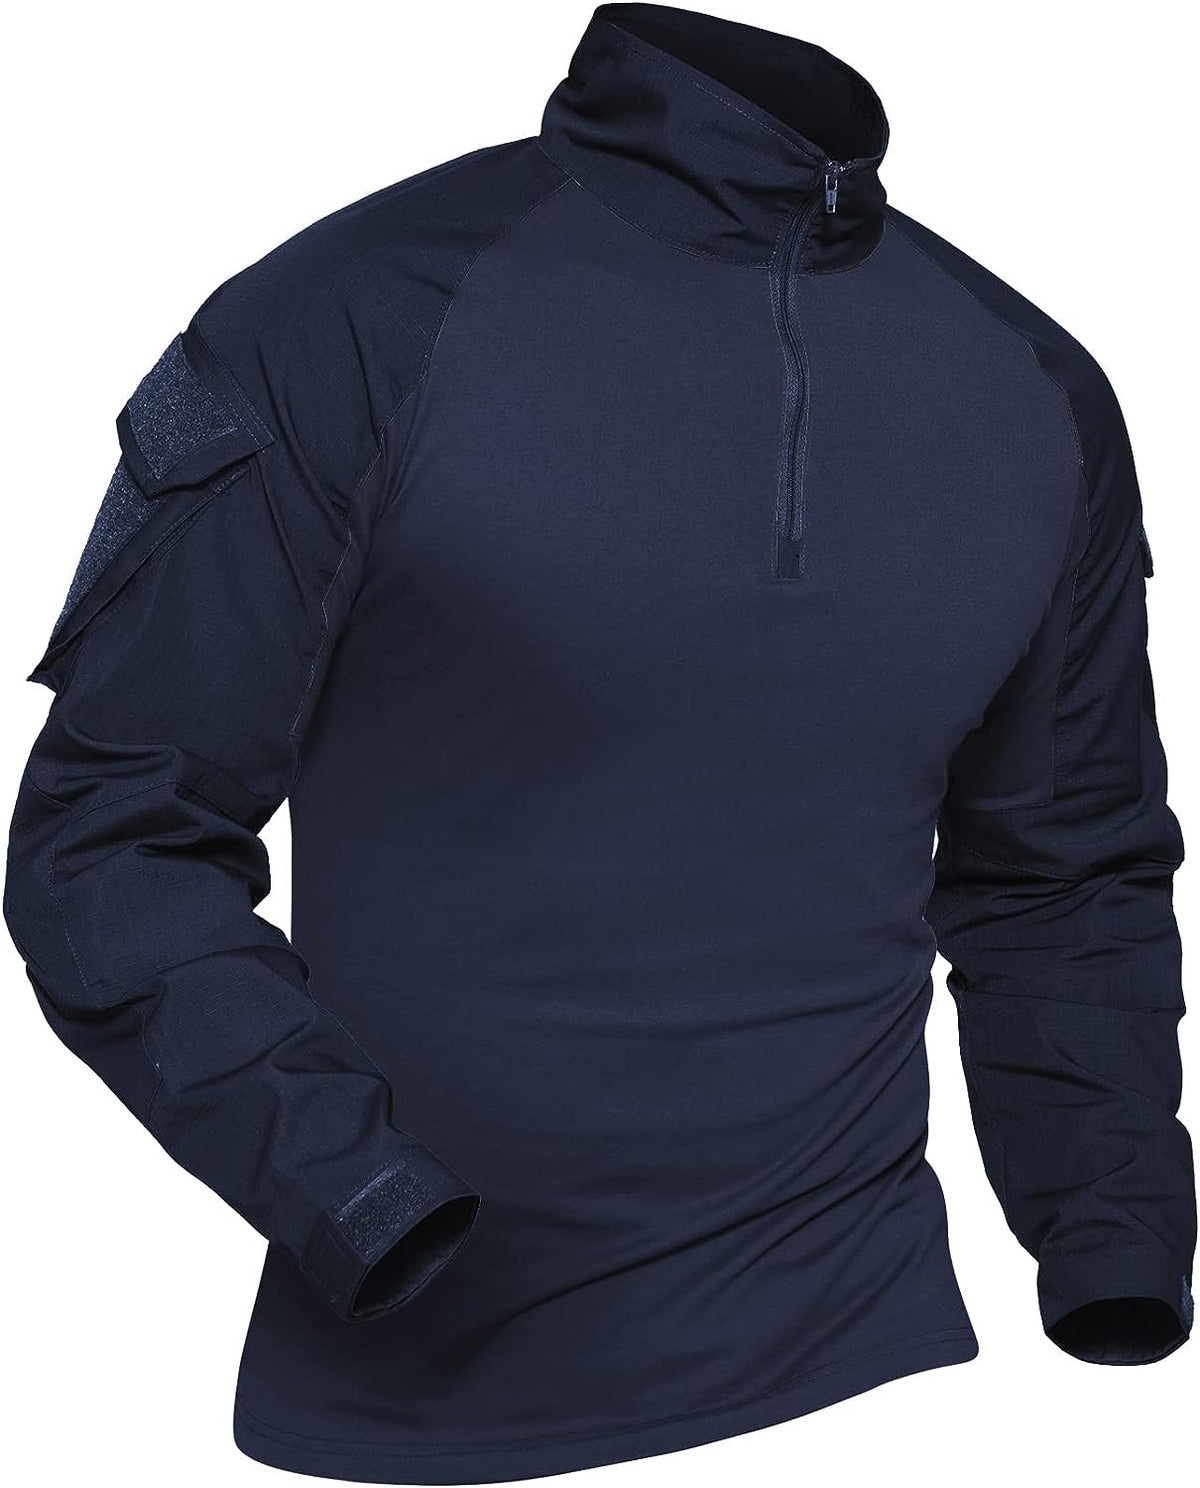 Combat Tactical Shirt for Men #Color_Navy - 2 Pockets